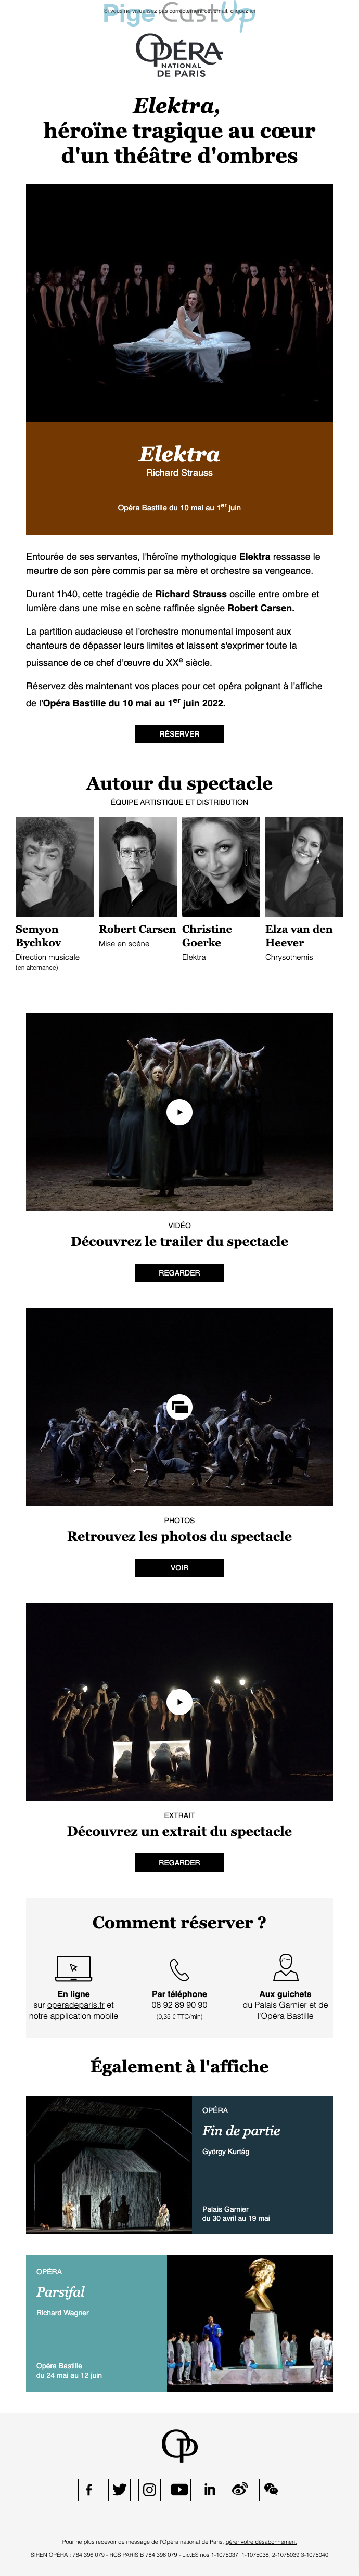 Exemple de Type de media   - Opéra de Paris - Marketing relationnel - Newsletter